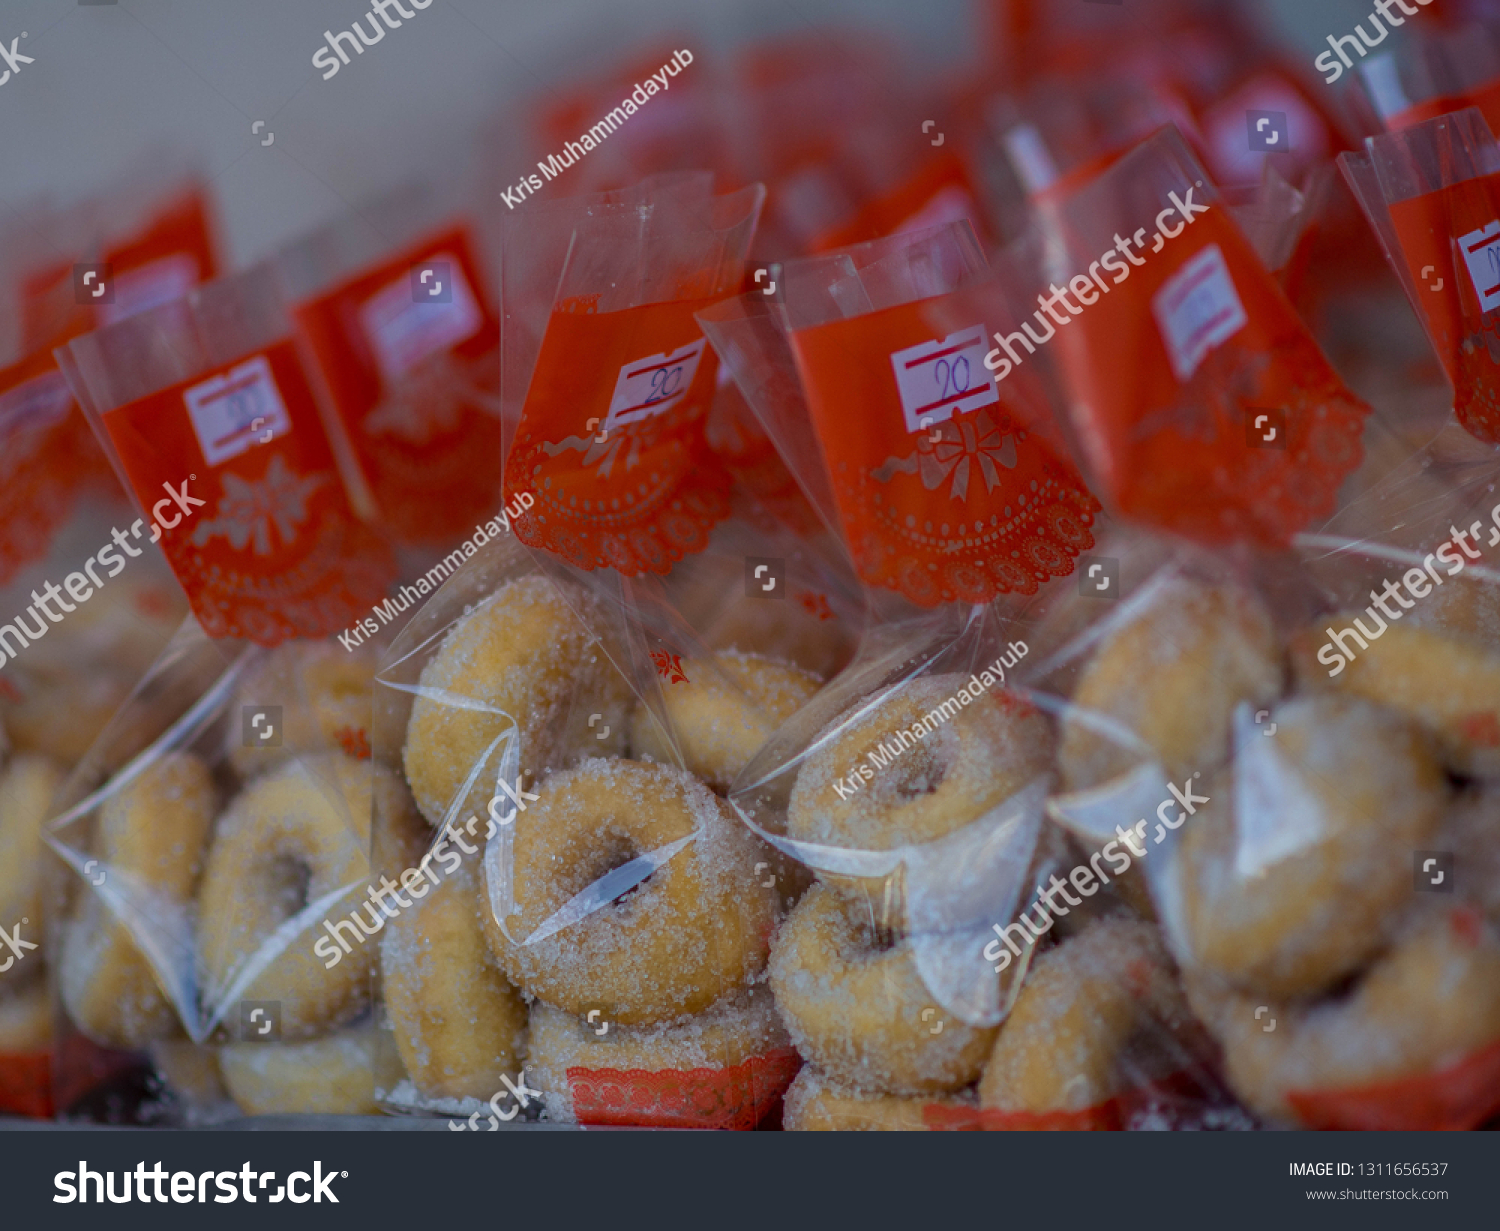 Download Cake Doughnut Sugar Plastic Packaging Bag Stock Photo Edit Now 1311656537 Yellowimages Mockups